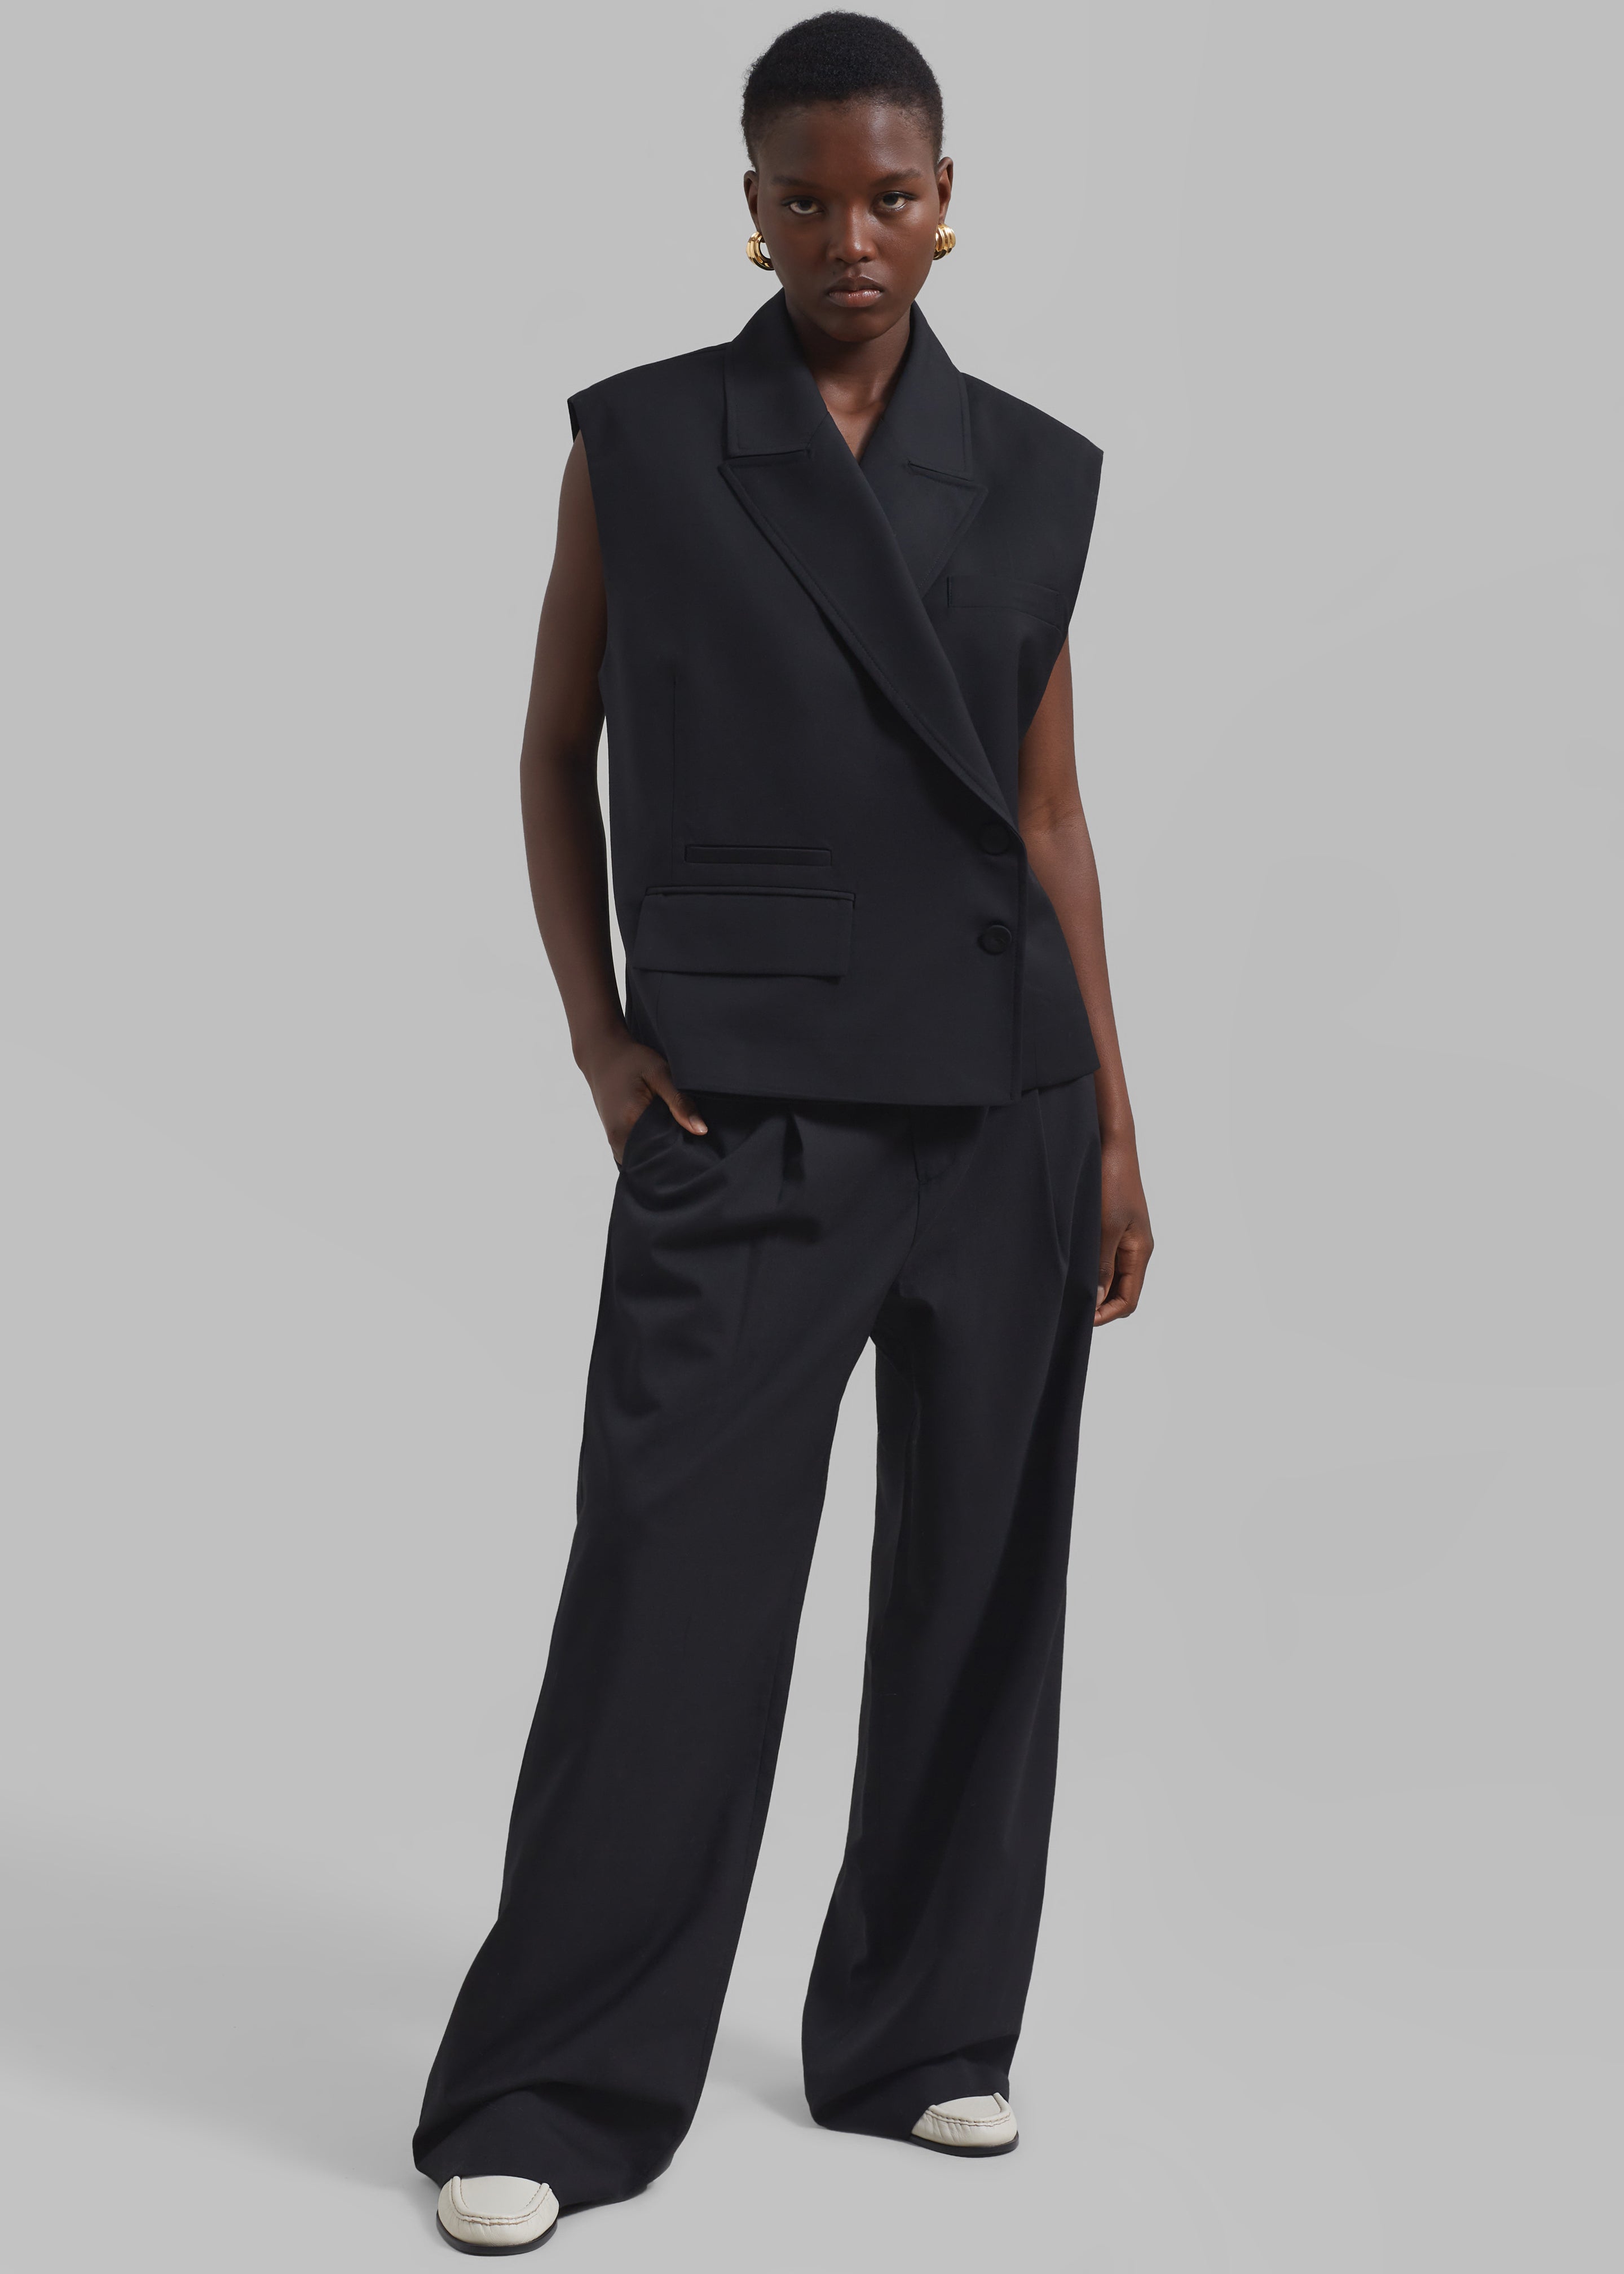 Alora Asymmetrical Vest - Black – The Frankie Shop